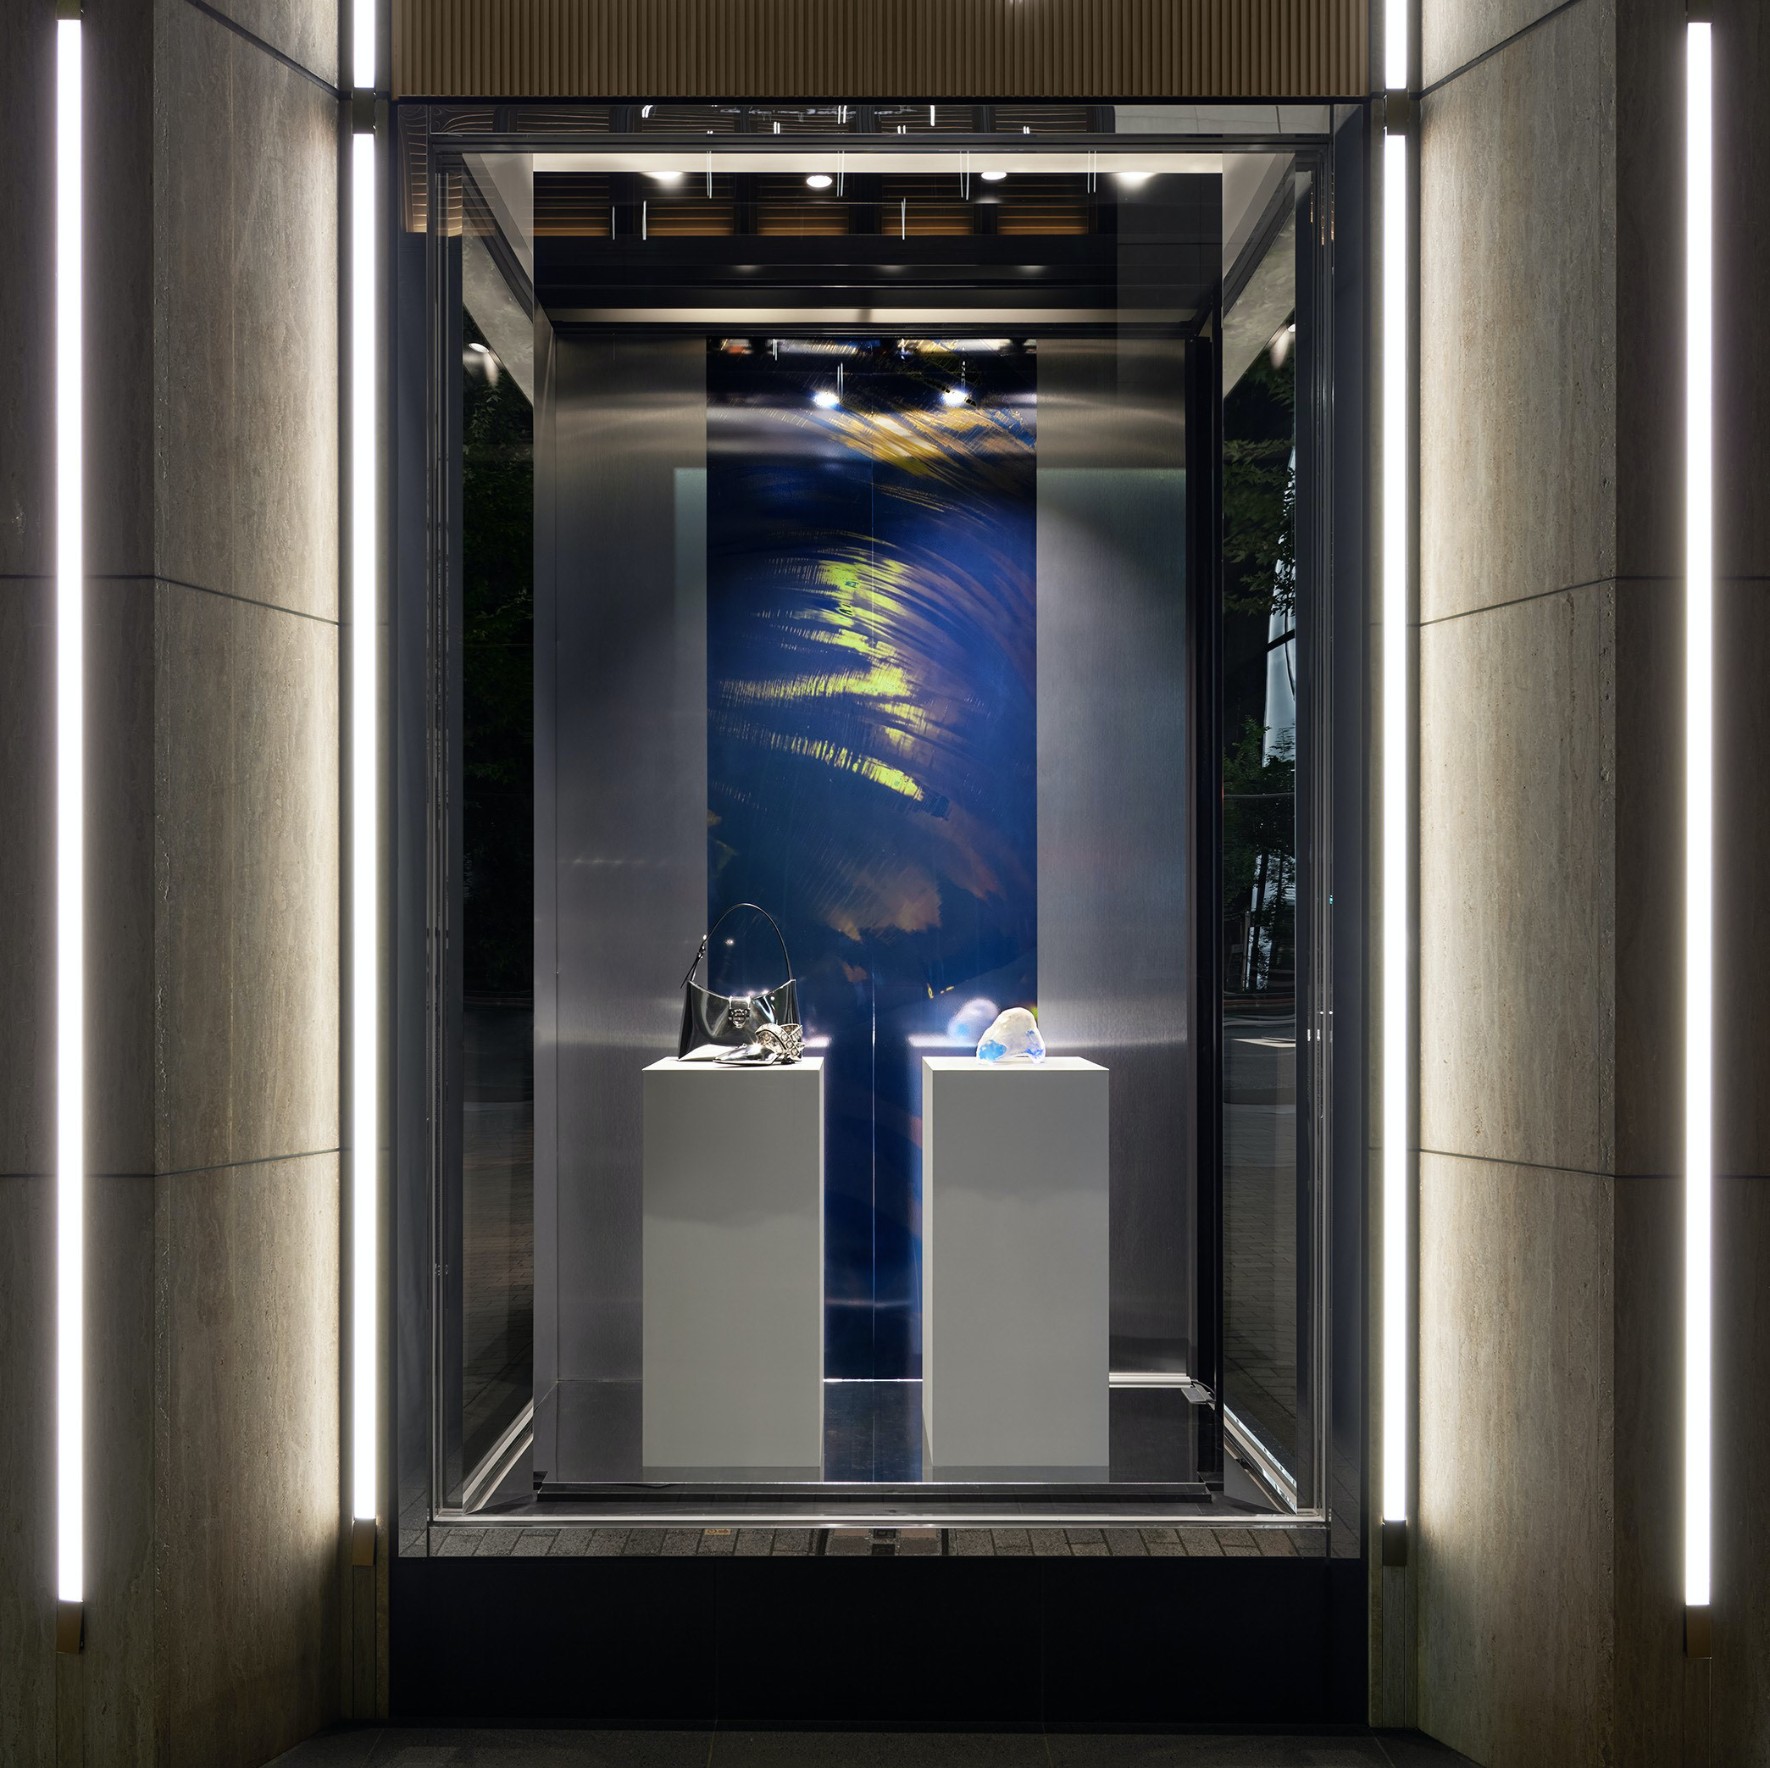 DESIGNART TOKYO 2021 opticalverse展で発表されたガラス作品momentiteの写真